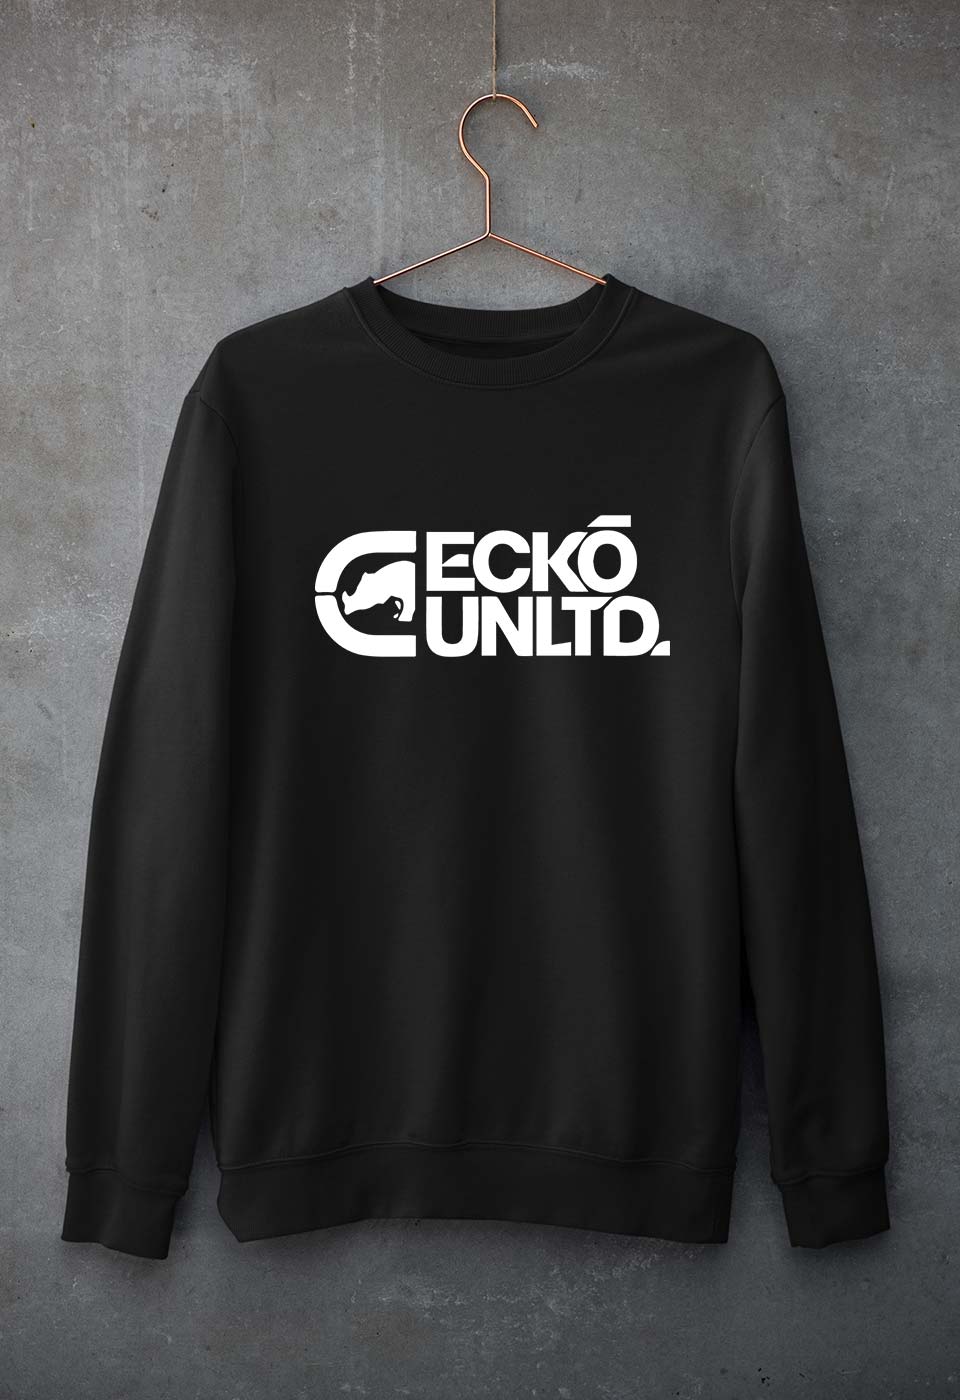 Ecko Unltd Unisex Sweatshirt for Men/Women-S(40 Inches)-Black-Ektarfa.online